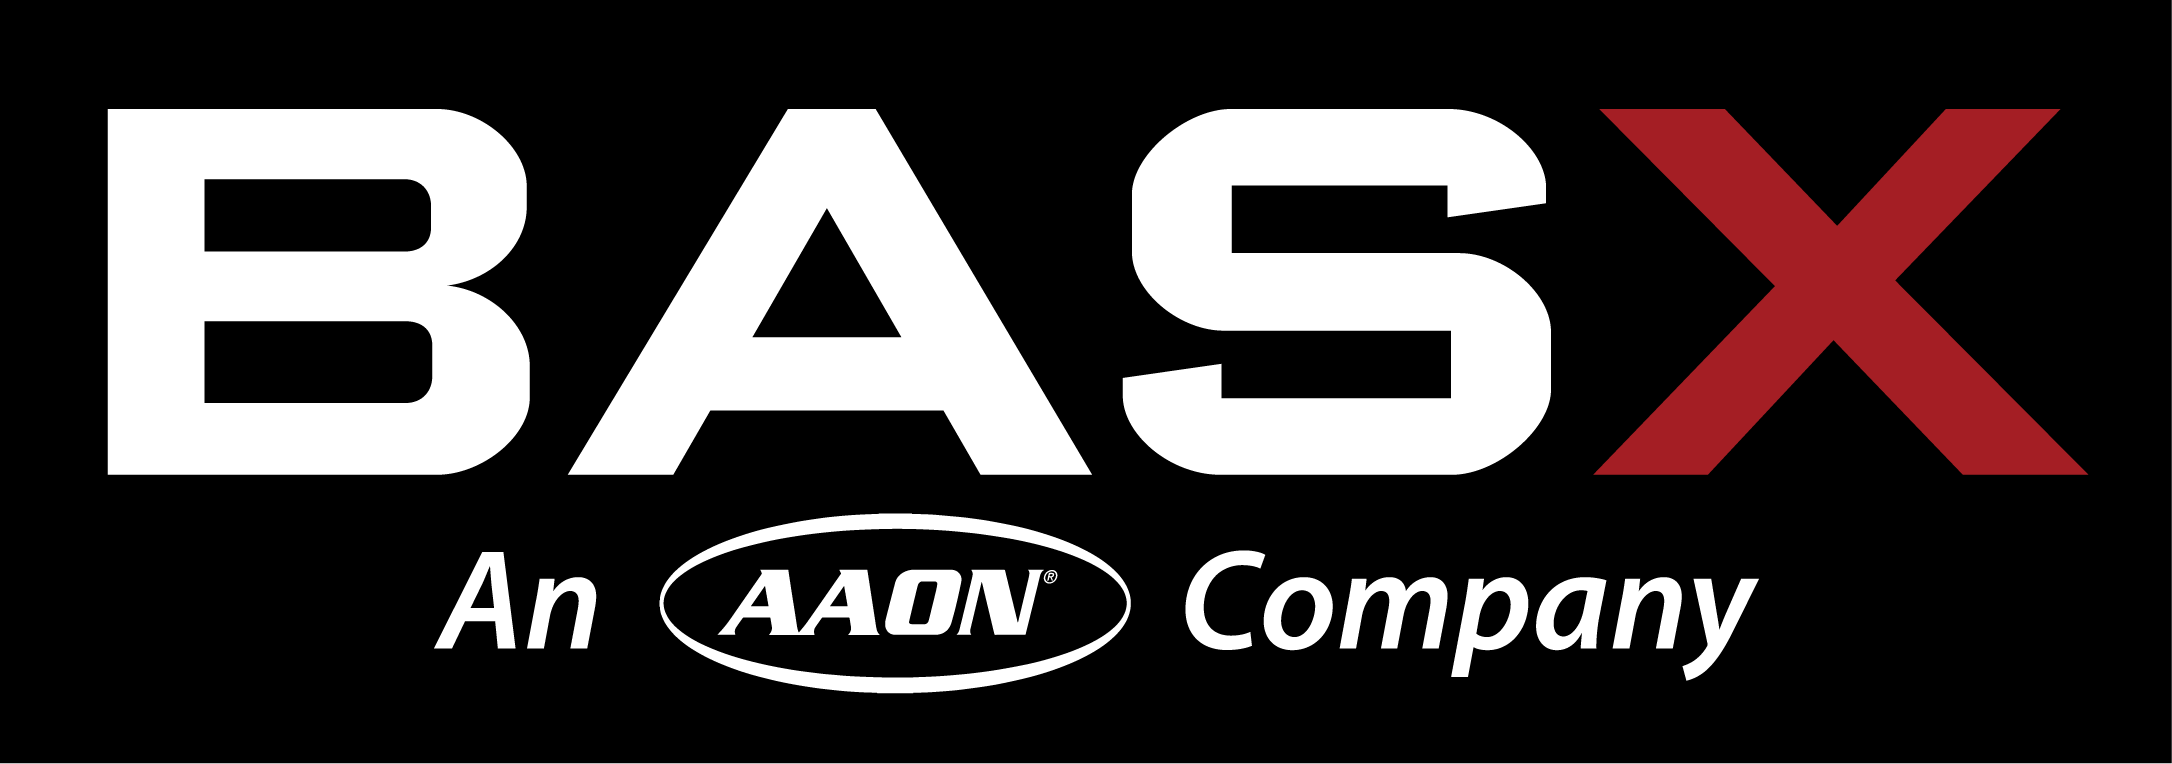 BASX AAON Logo On Black